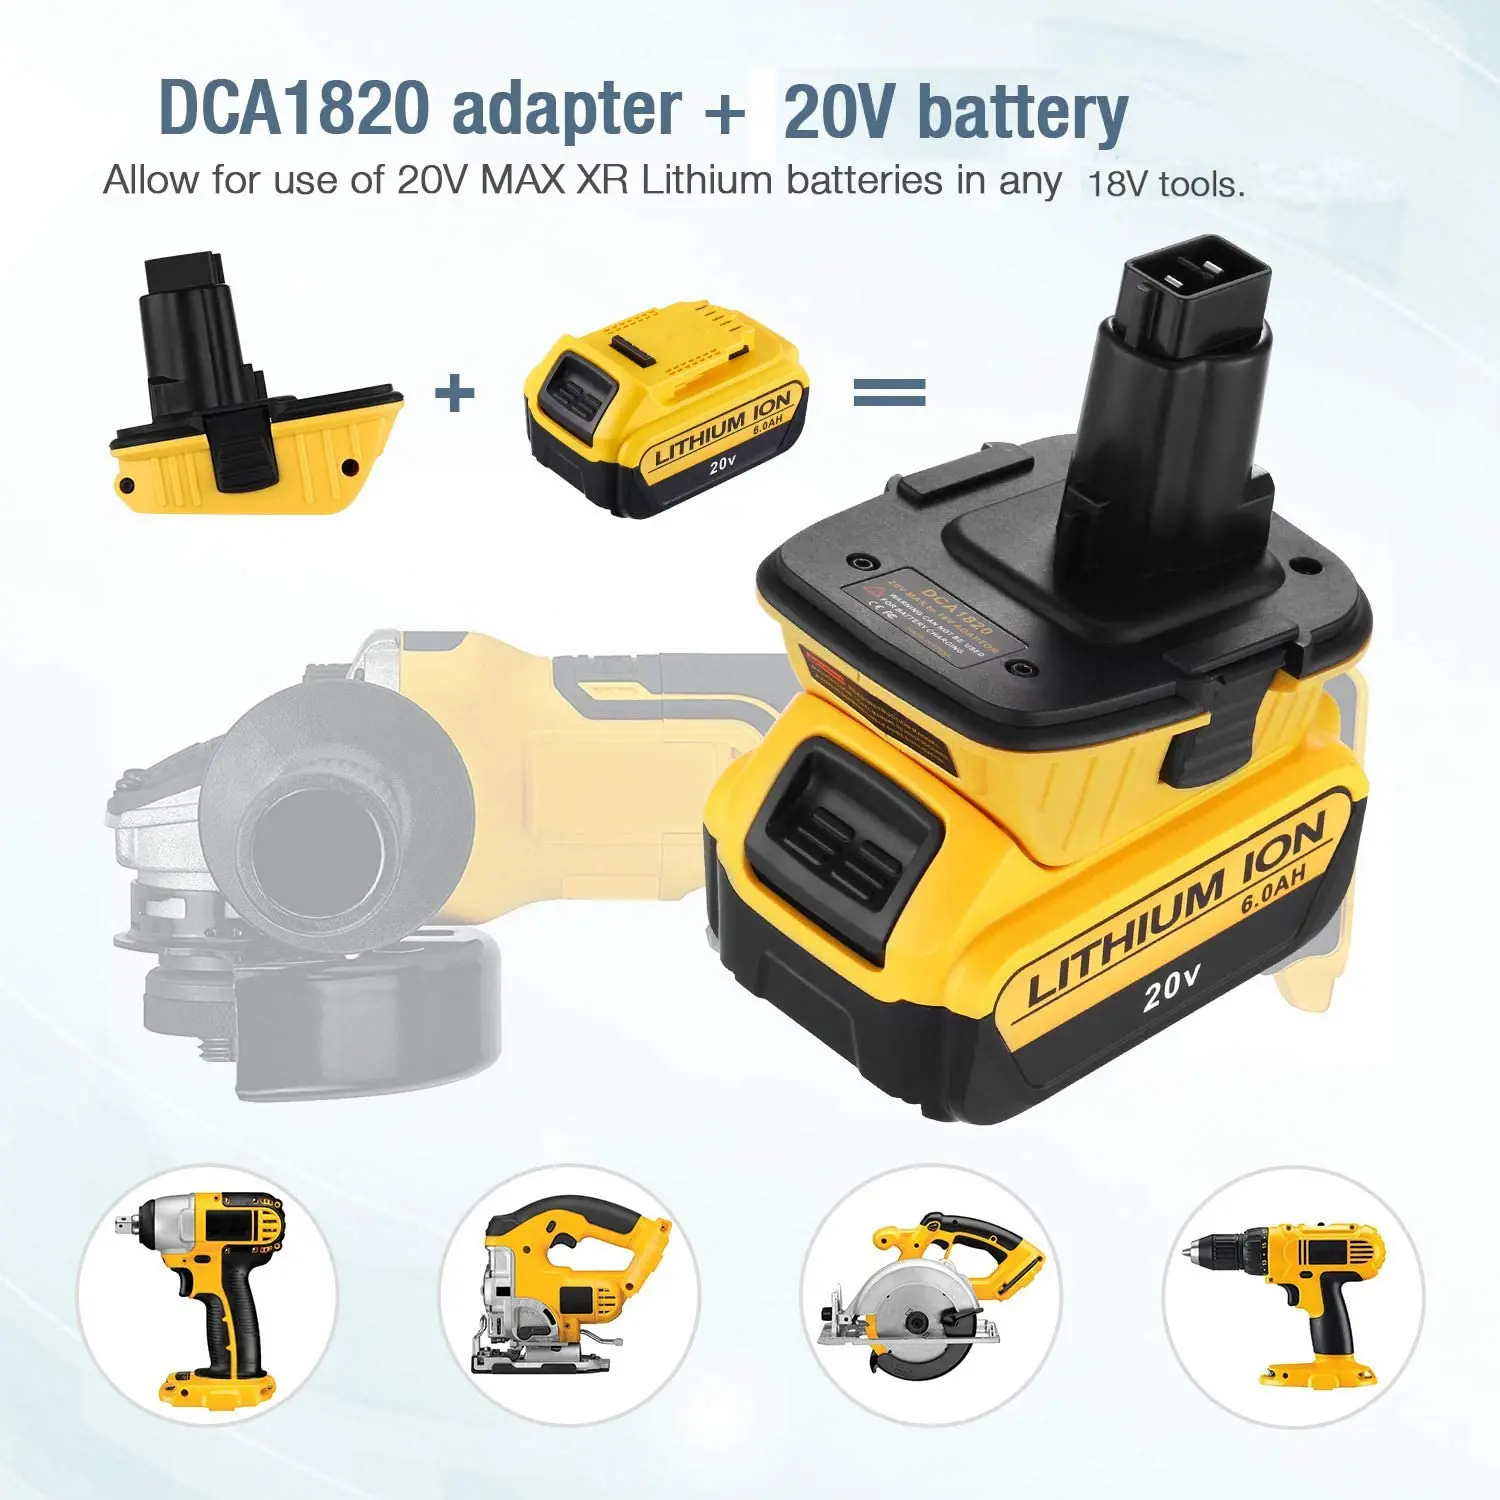 Pro dewalt 18V nástroje převést pro dewalt 20V as i lay dying baterie DCA1820 baterie adaptér práce pro dewalt maxi dcb200 dcb201 dcb203